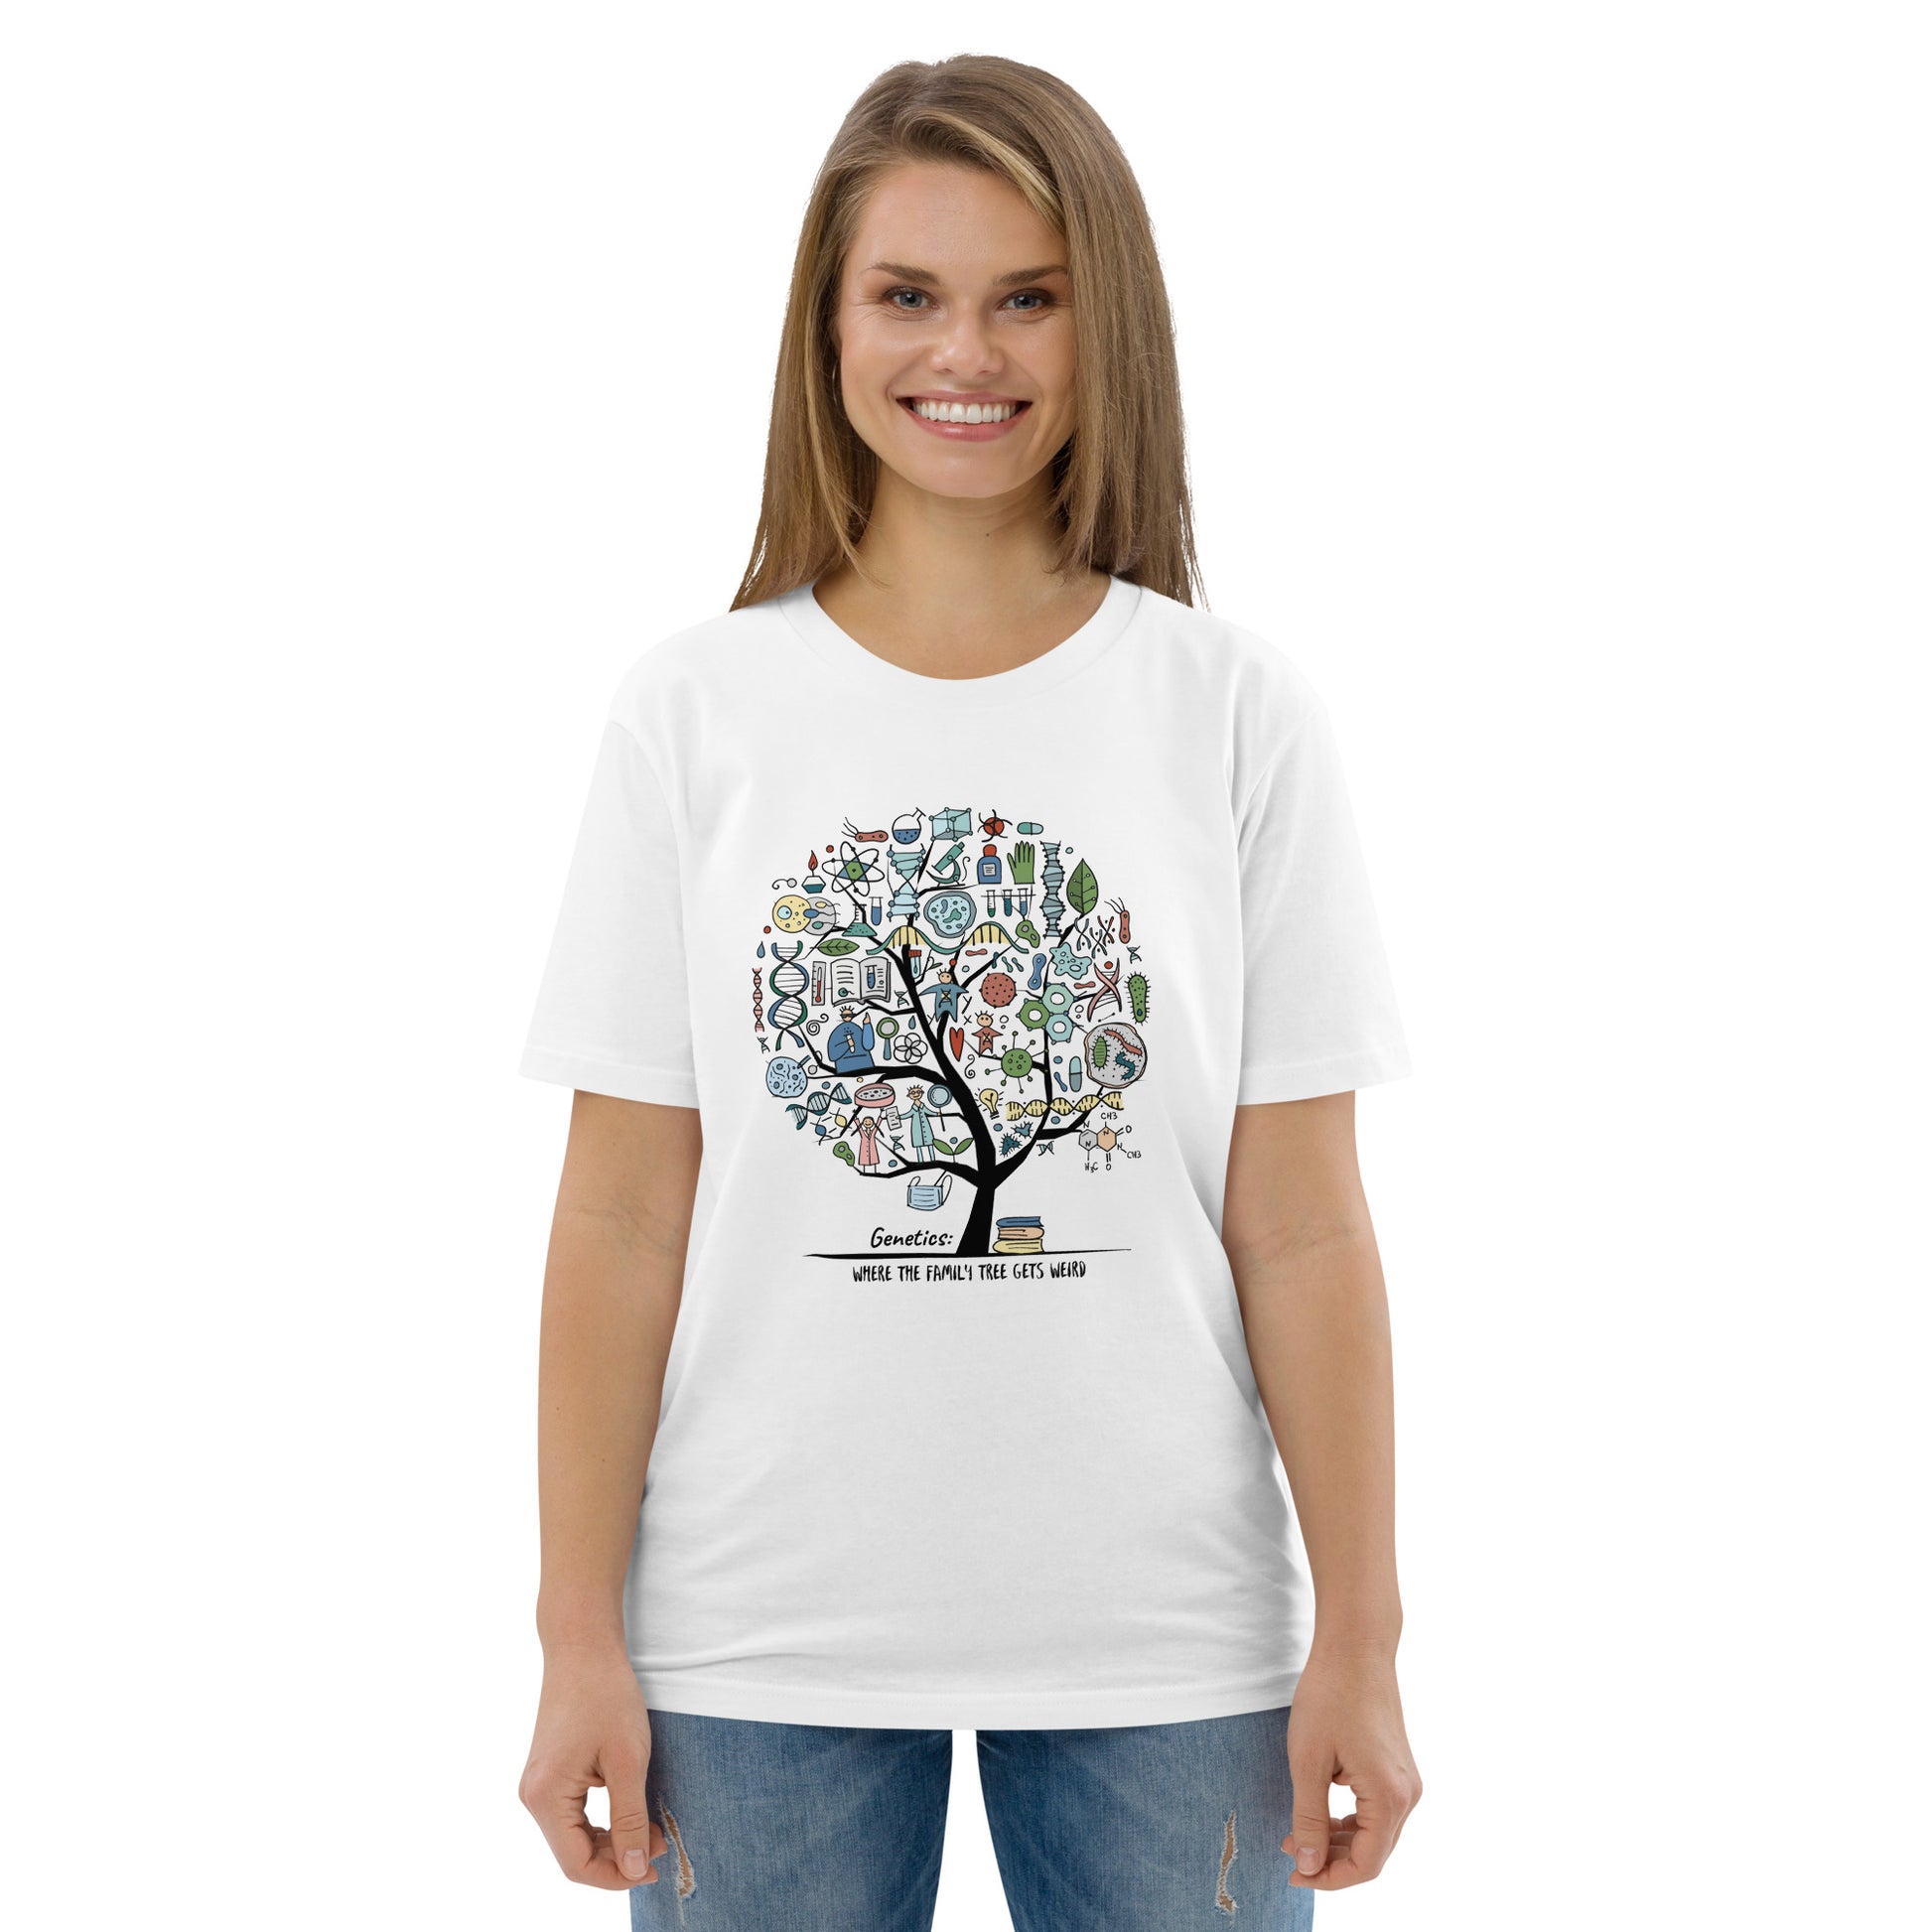 Unisex organic cotton t-shirt Genetic kudrylab